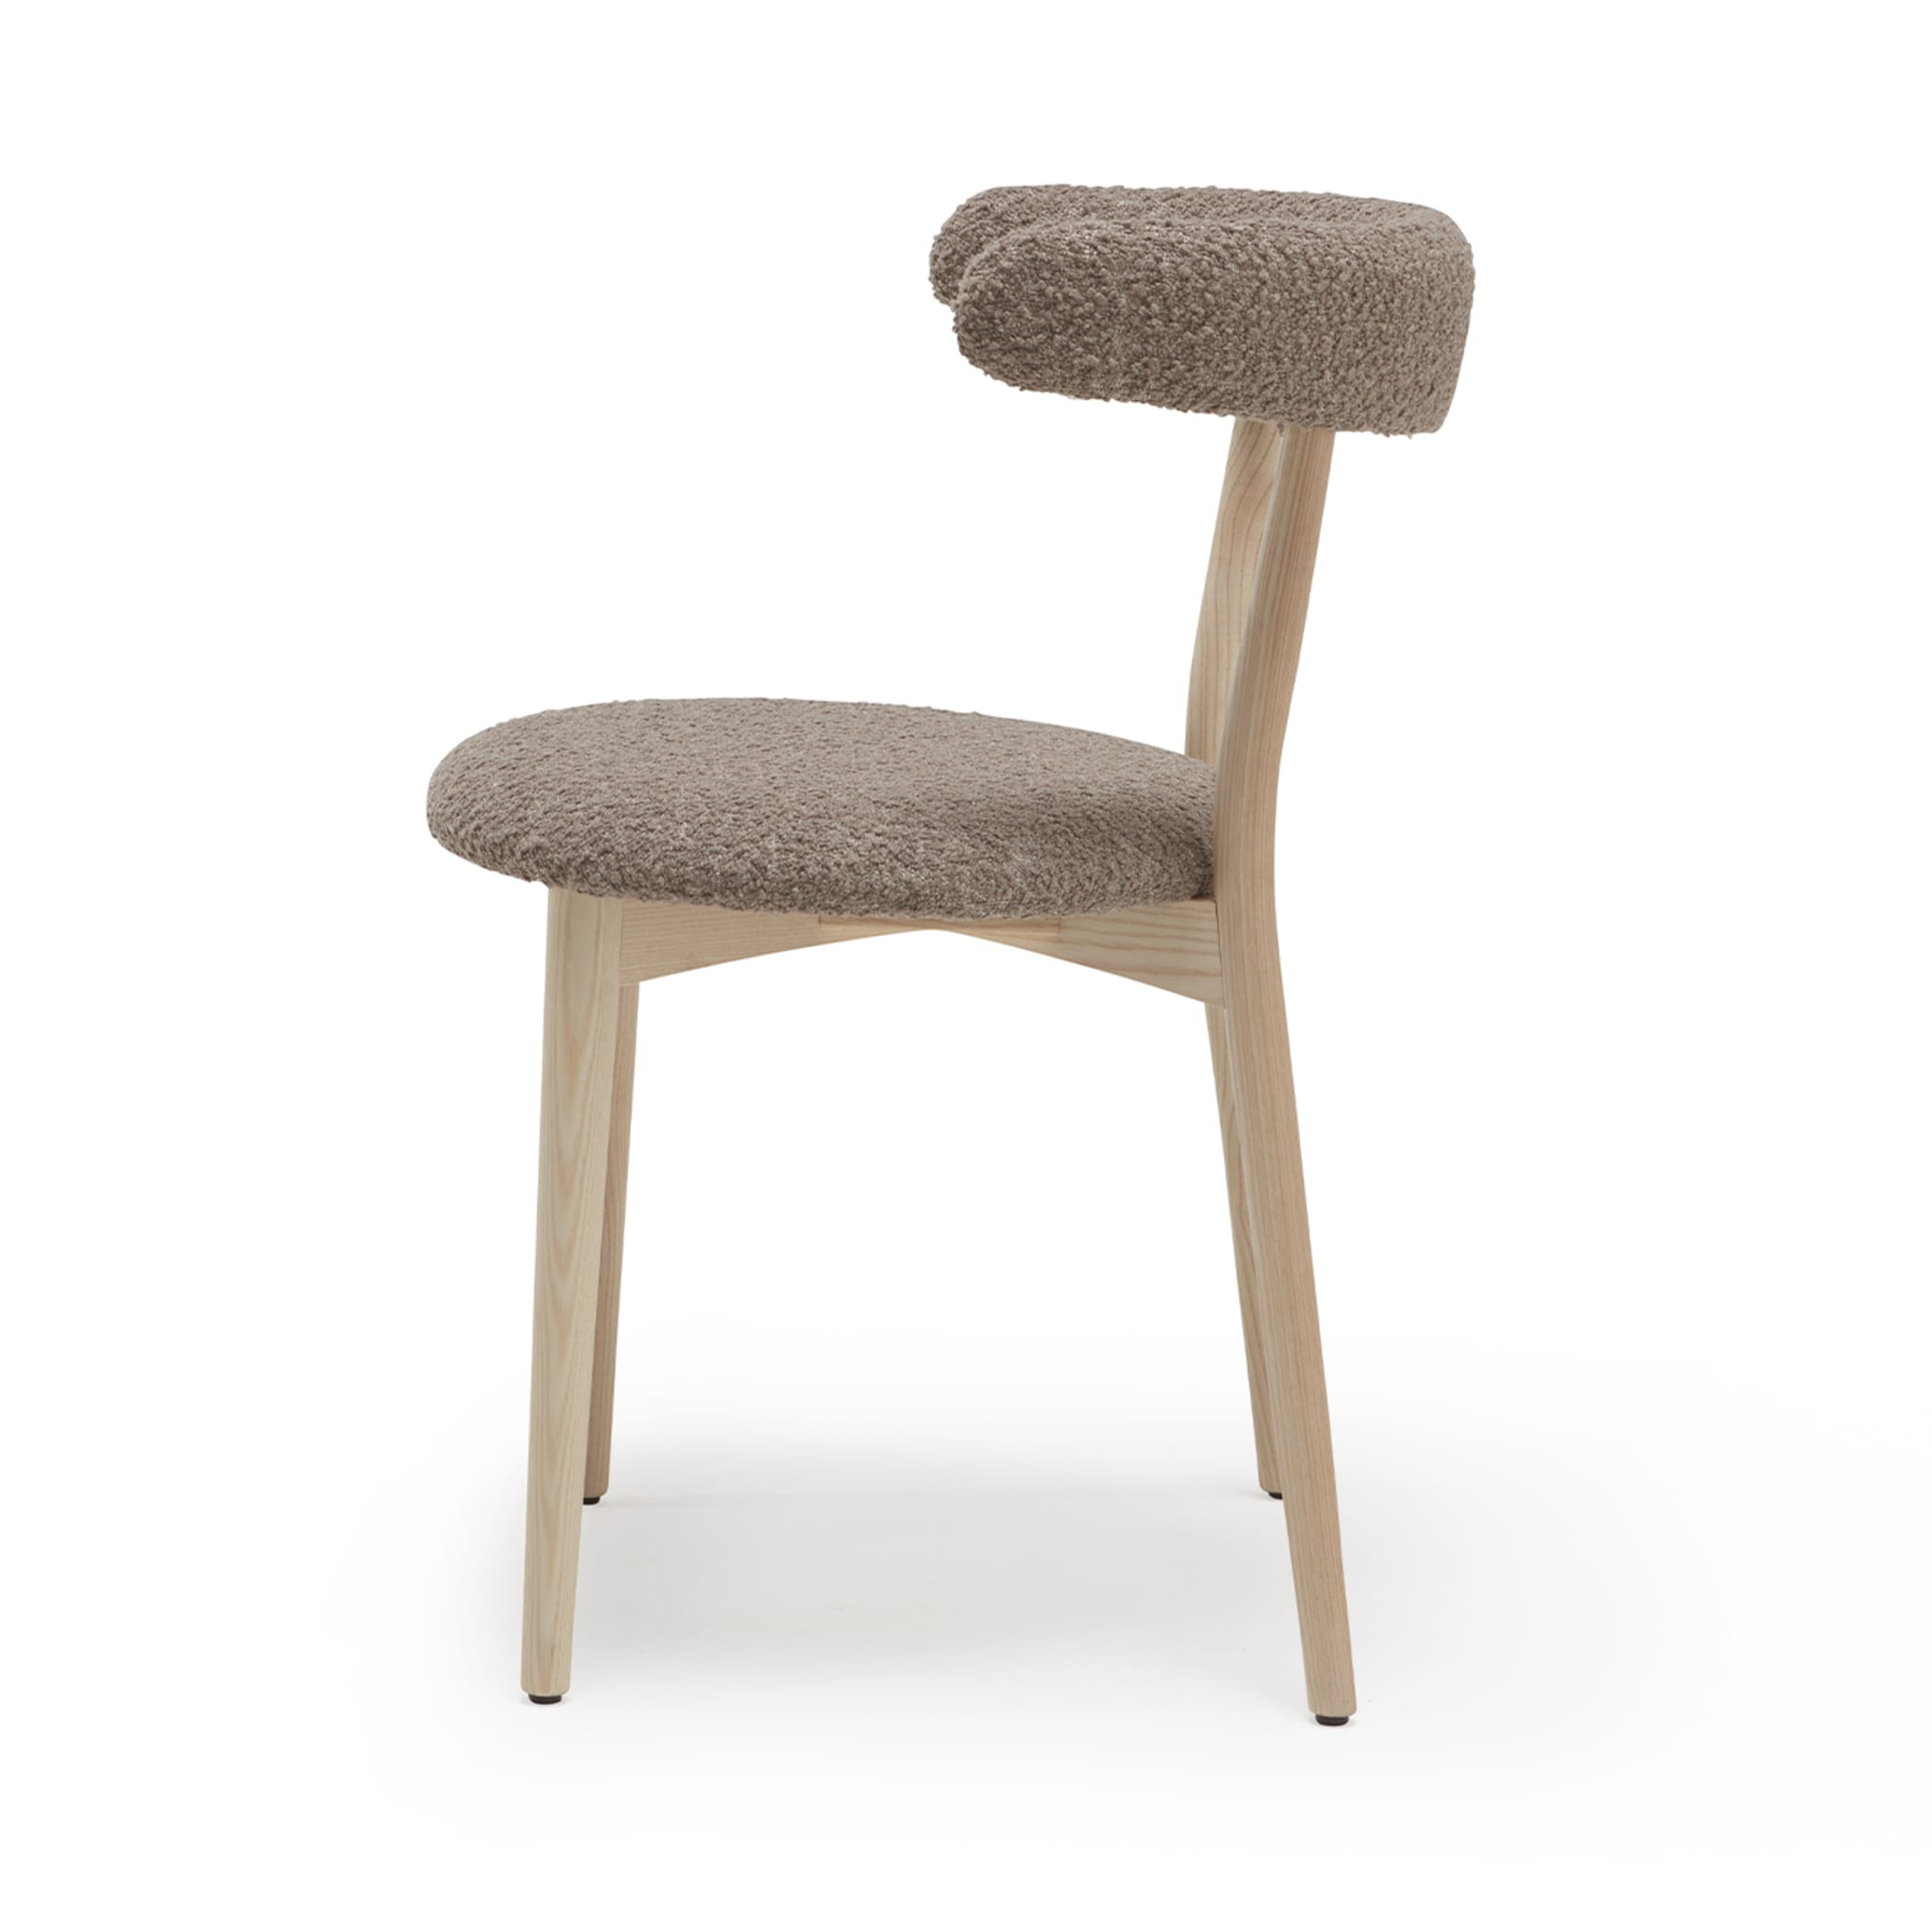 BIO/S Brown Chair by Balutto Associati. - Alternative view 2